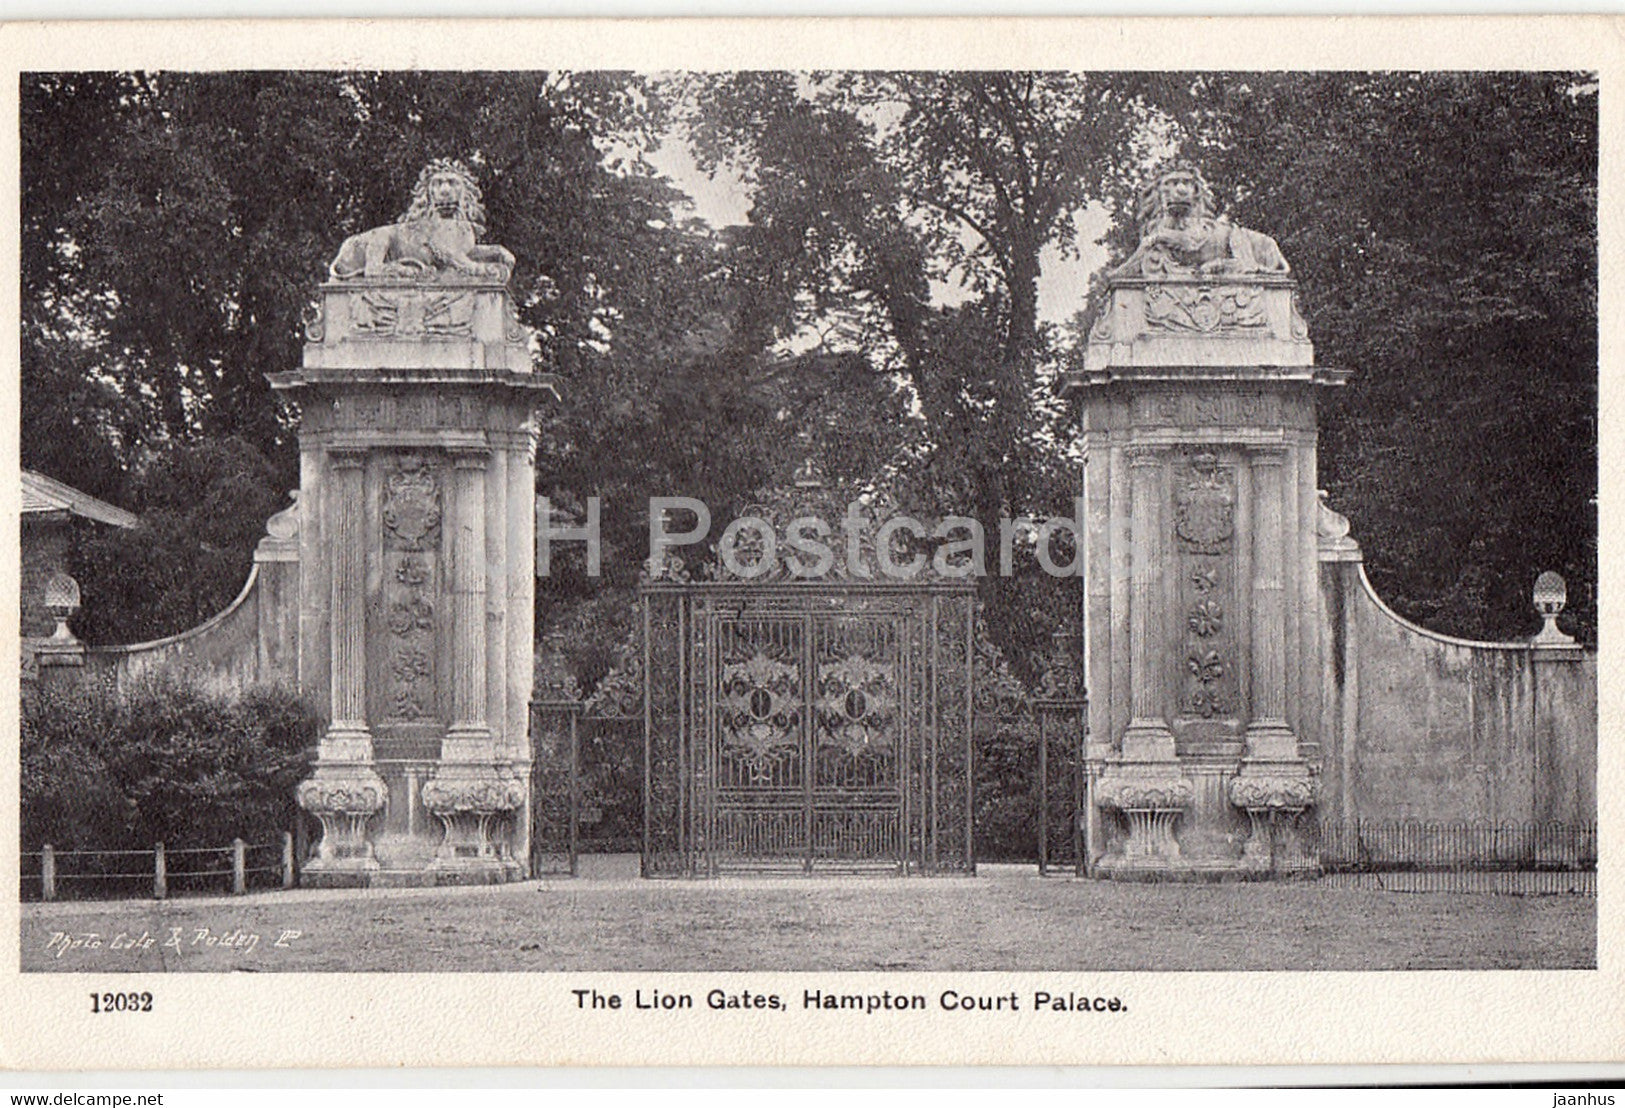 The Lion Gates - Hampton Court Palace - 12032 - old postcard - England - United Kingdom - unused - JH Postcards